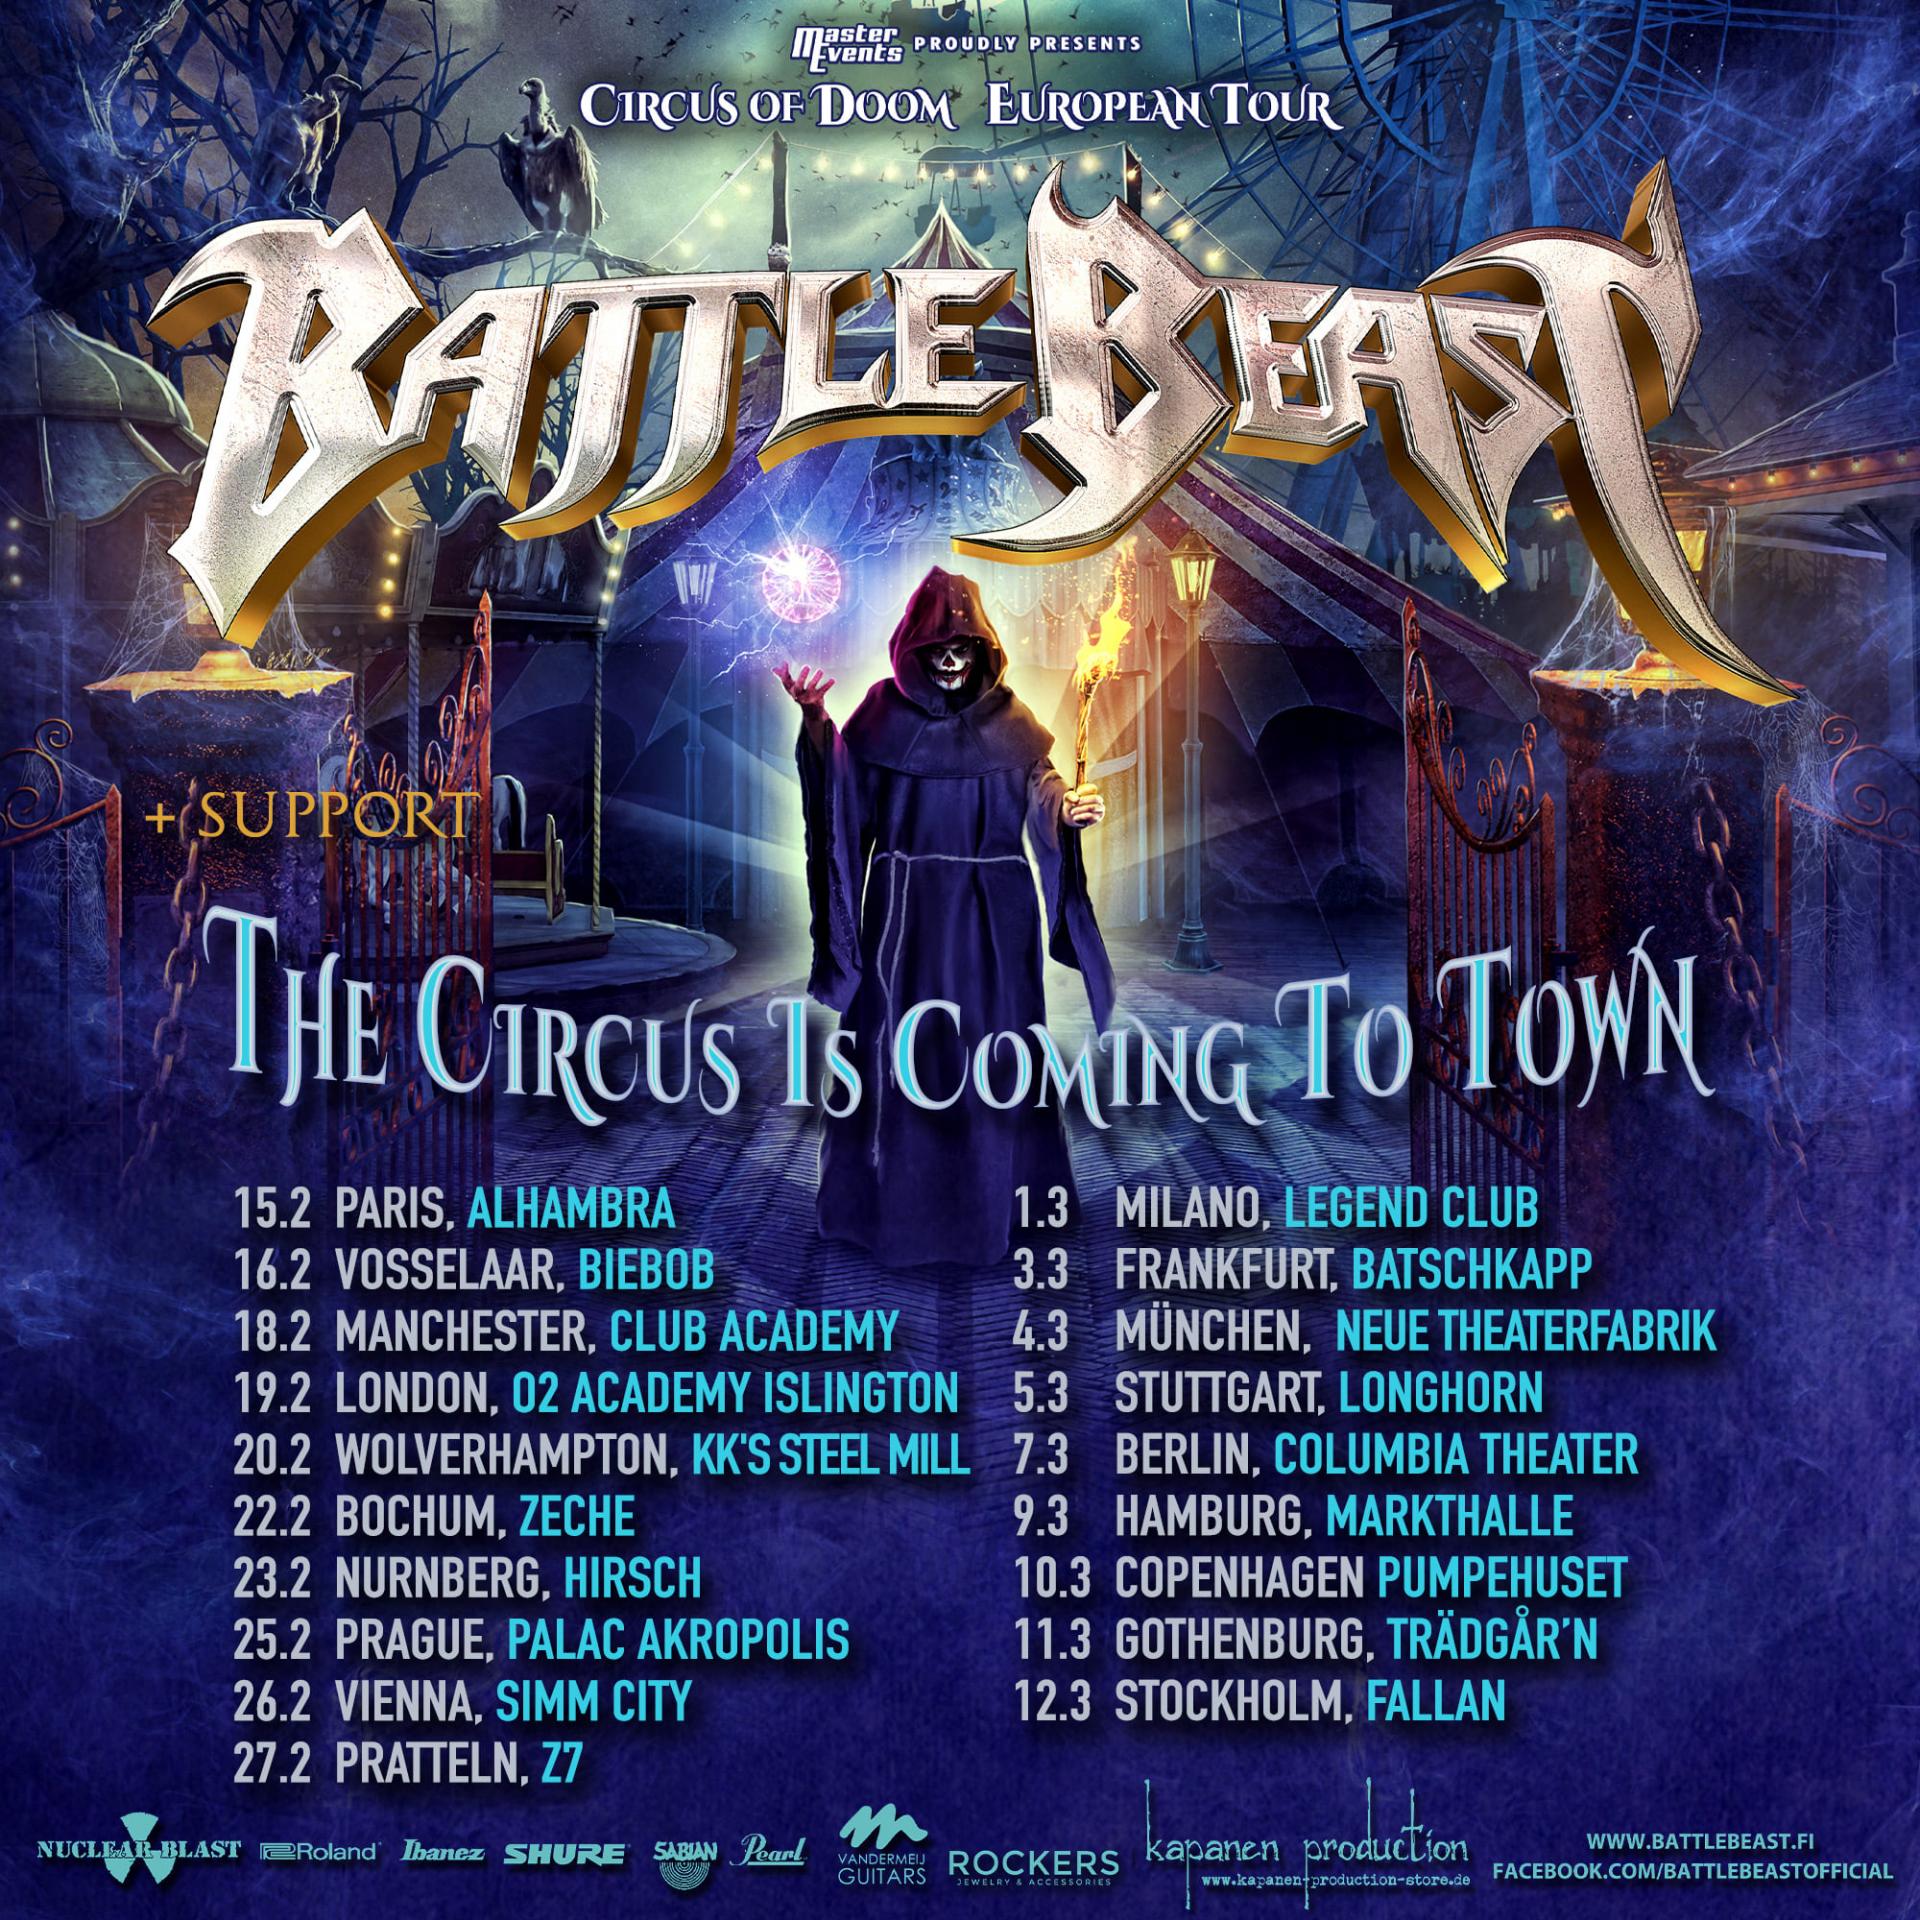 Circus of doom european tour